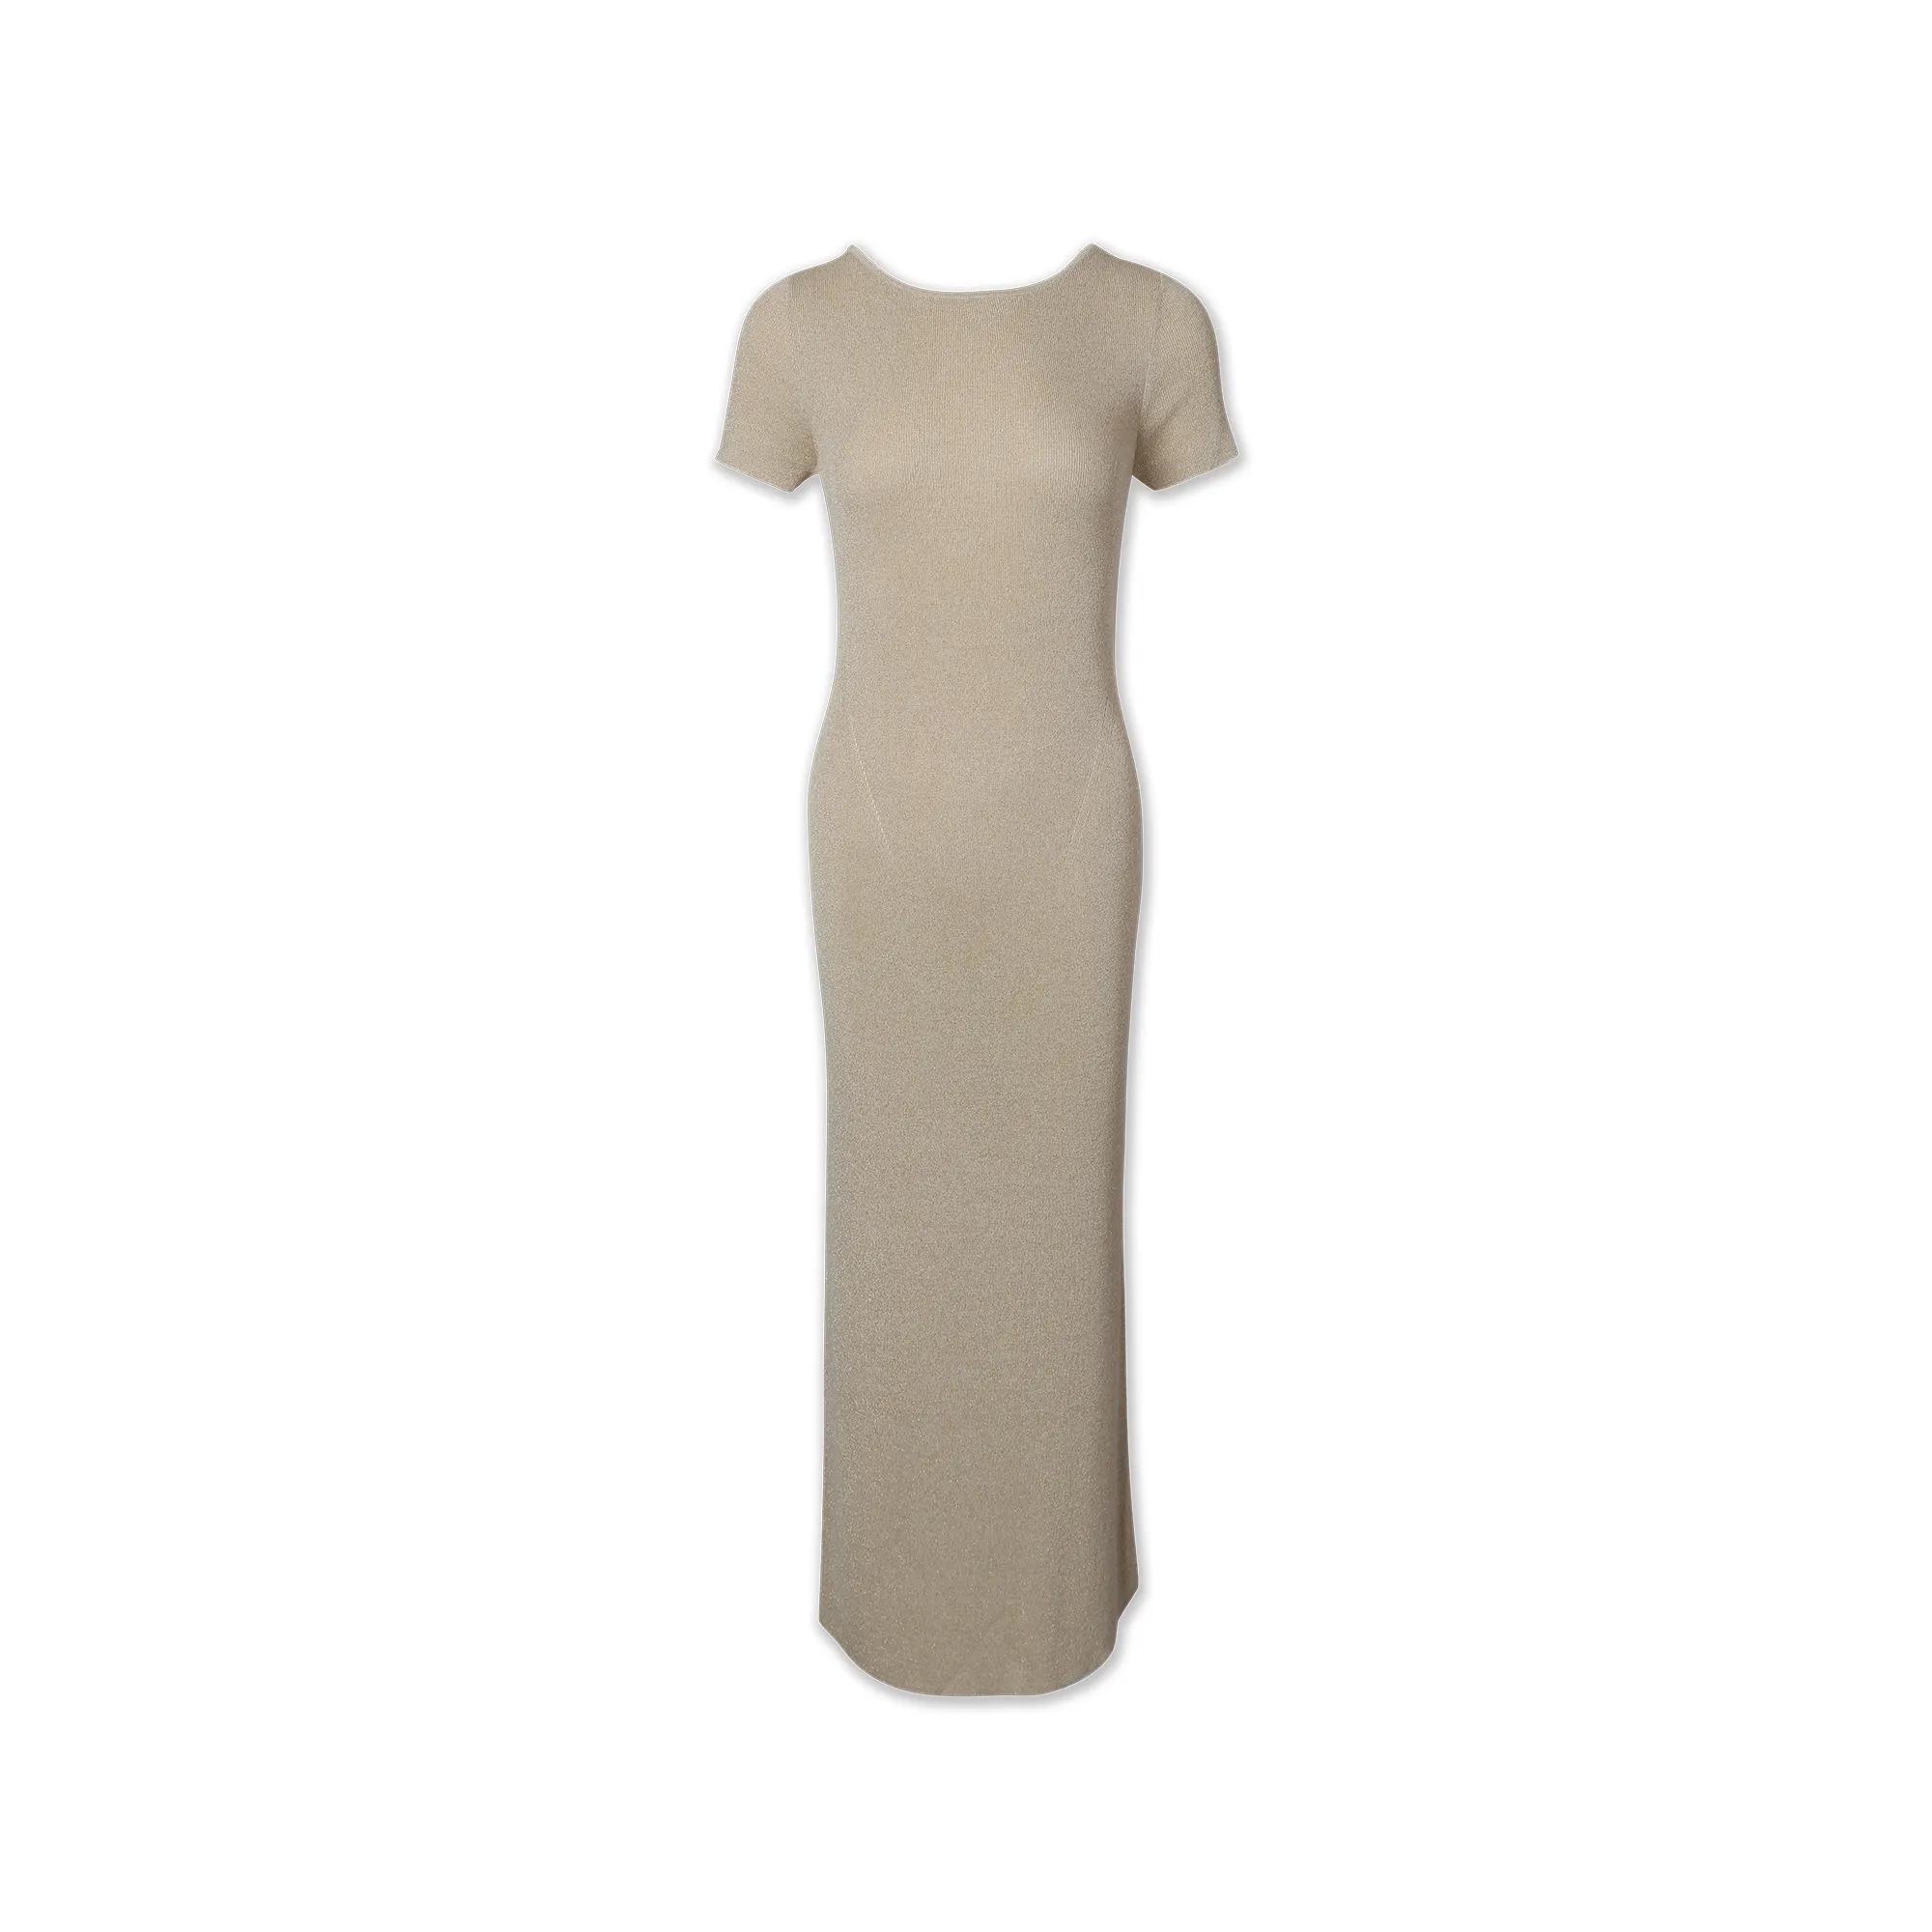 महिलाओं के लिए फैशनेबल उच्च गुणवत्ता वाली गोल गर्दन छोटी आस्तीन वाली कलर ब्लॉक निट ड्रेस